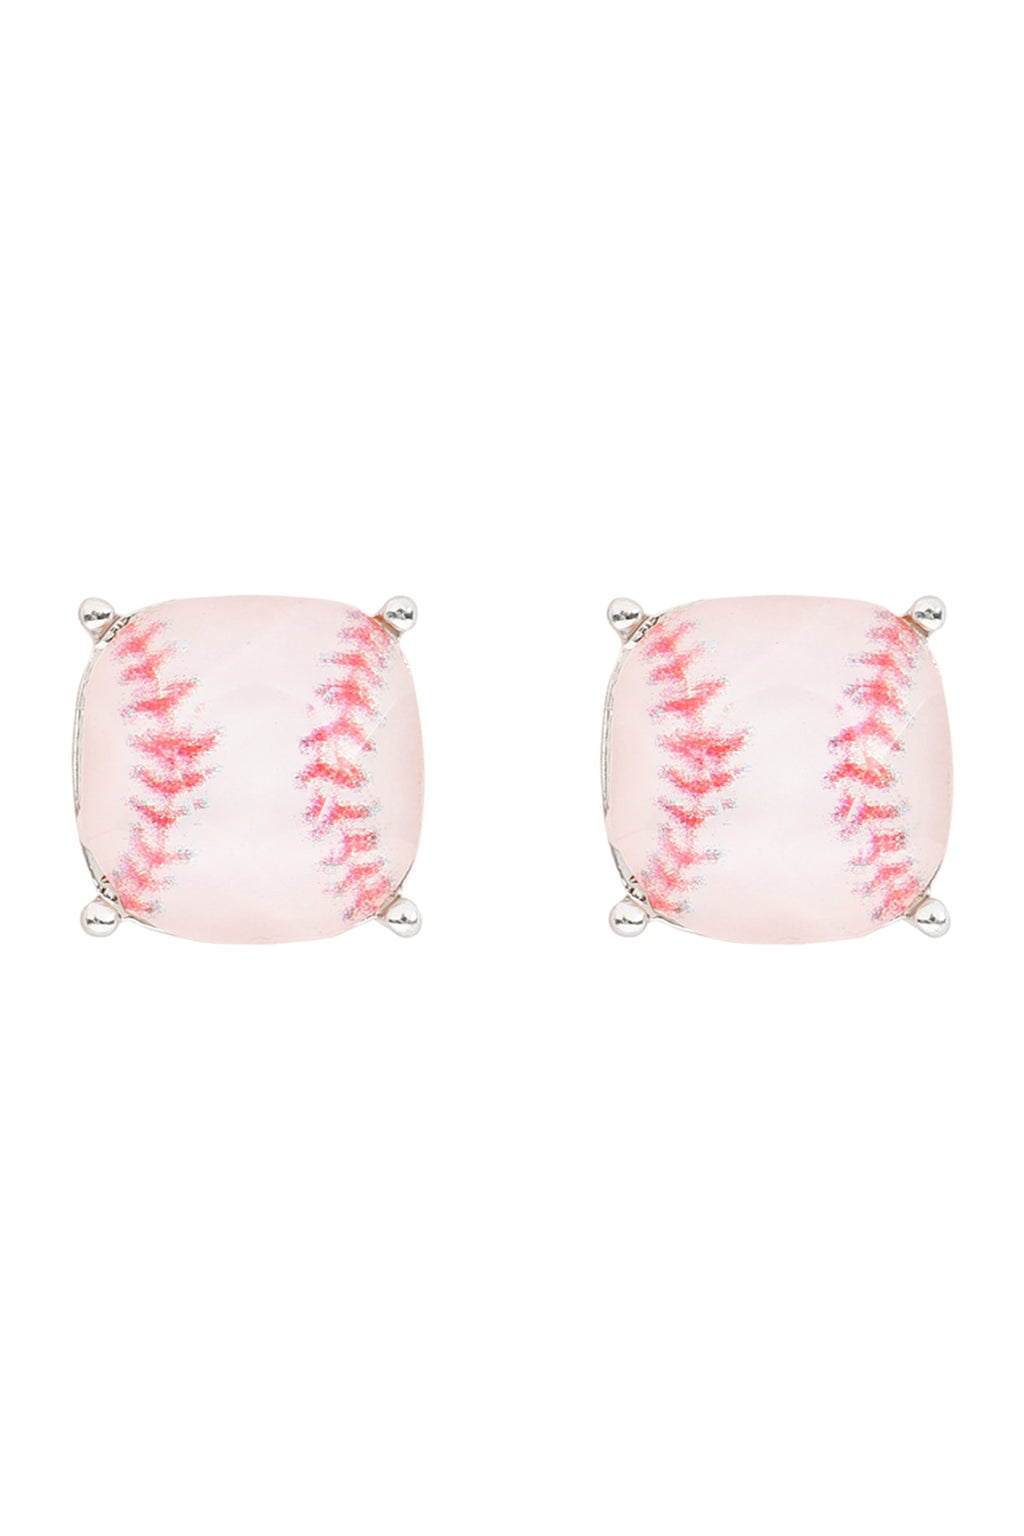 Sports Cushion Cut Baseball Stud Earrings White Silver - Pack of 6